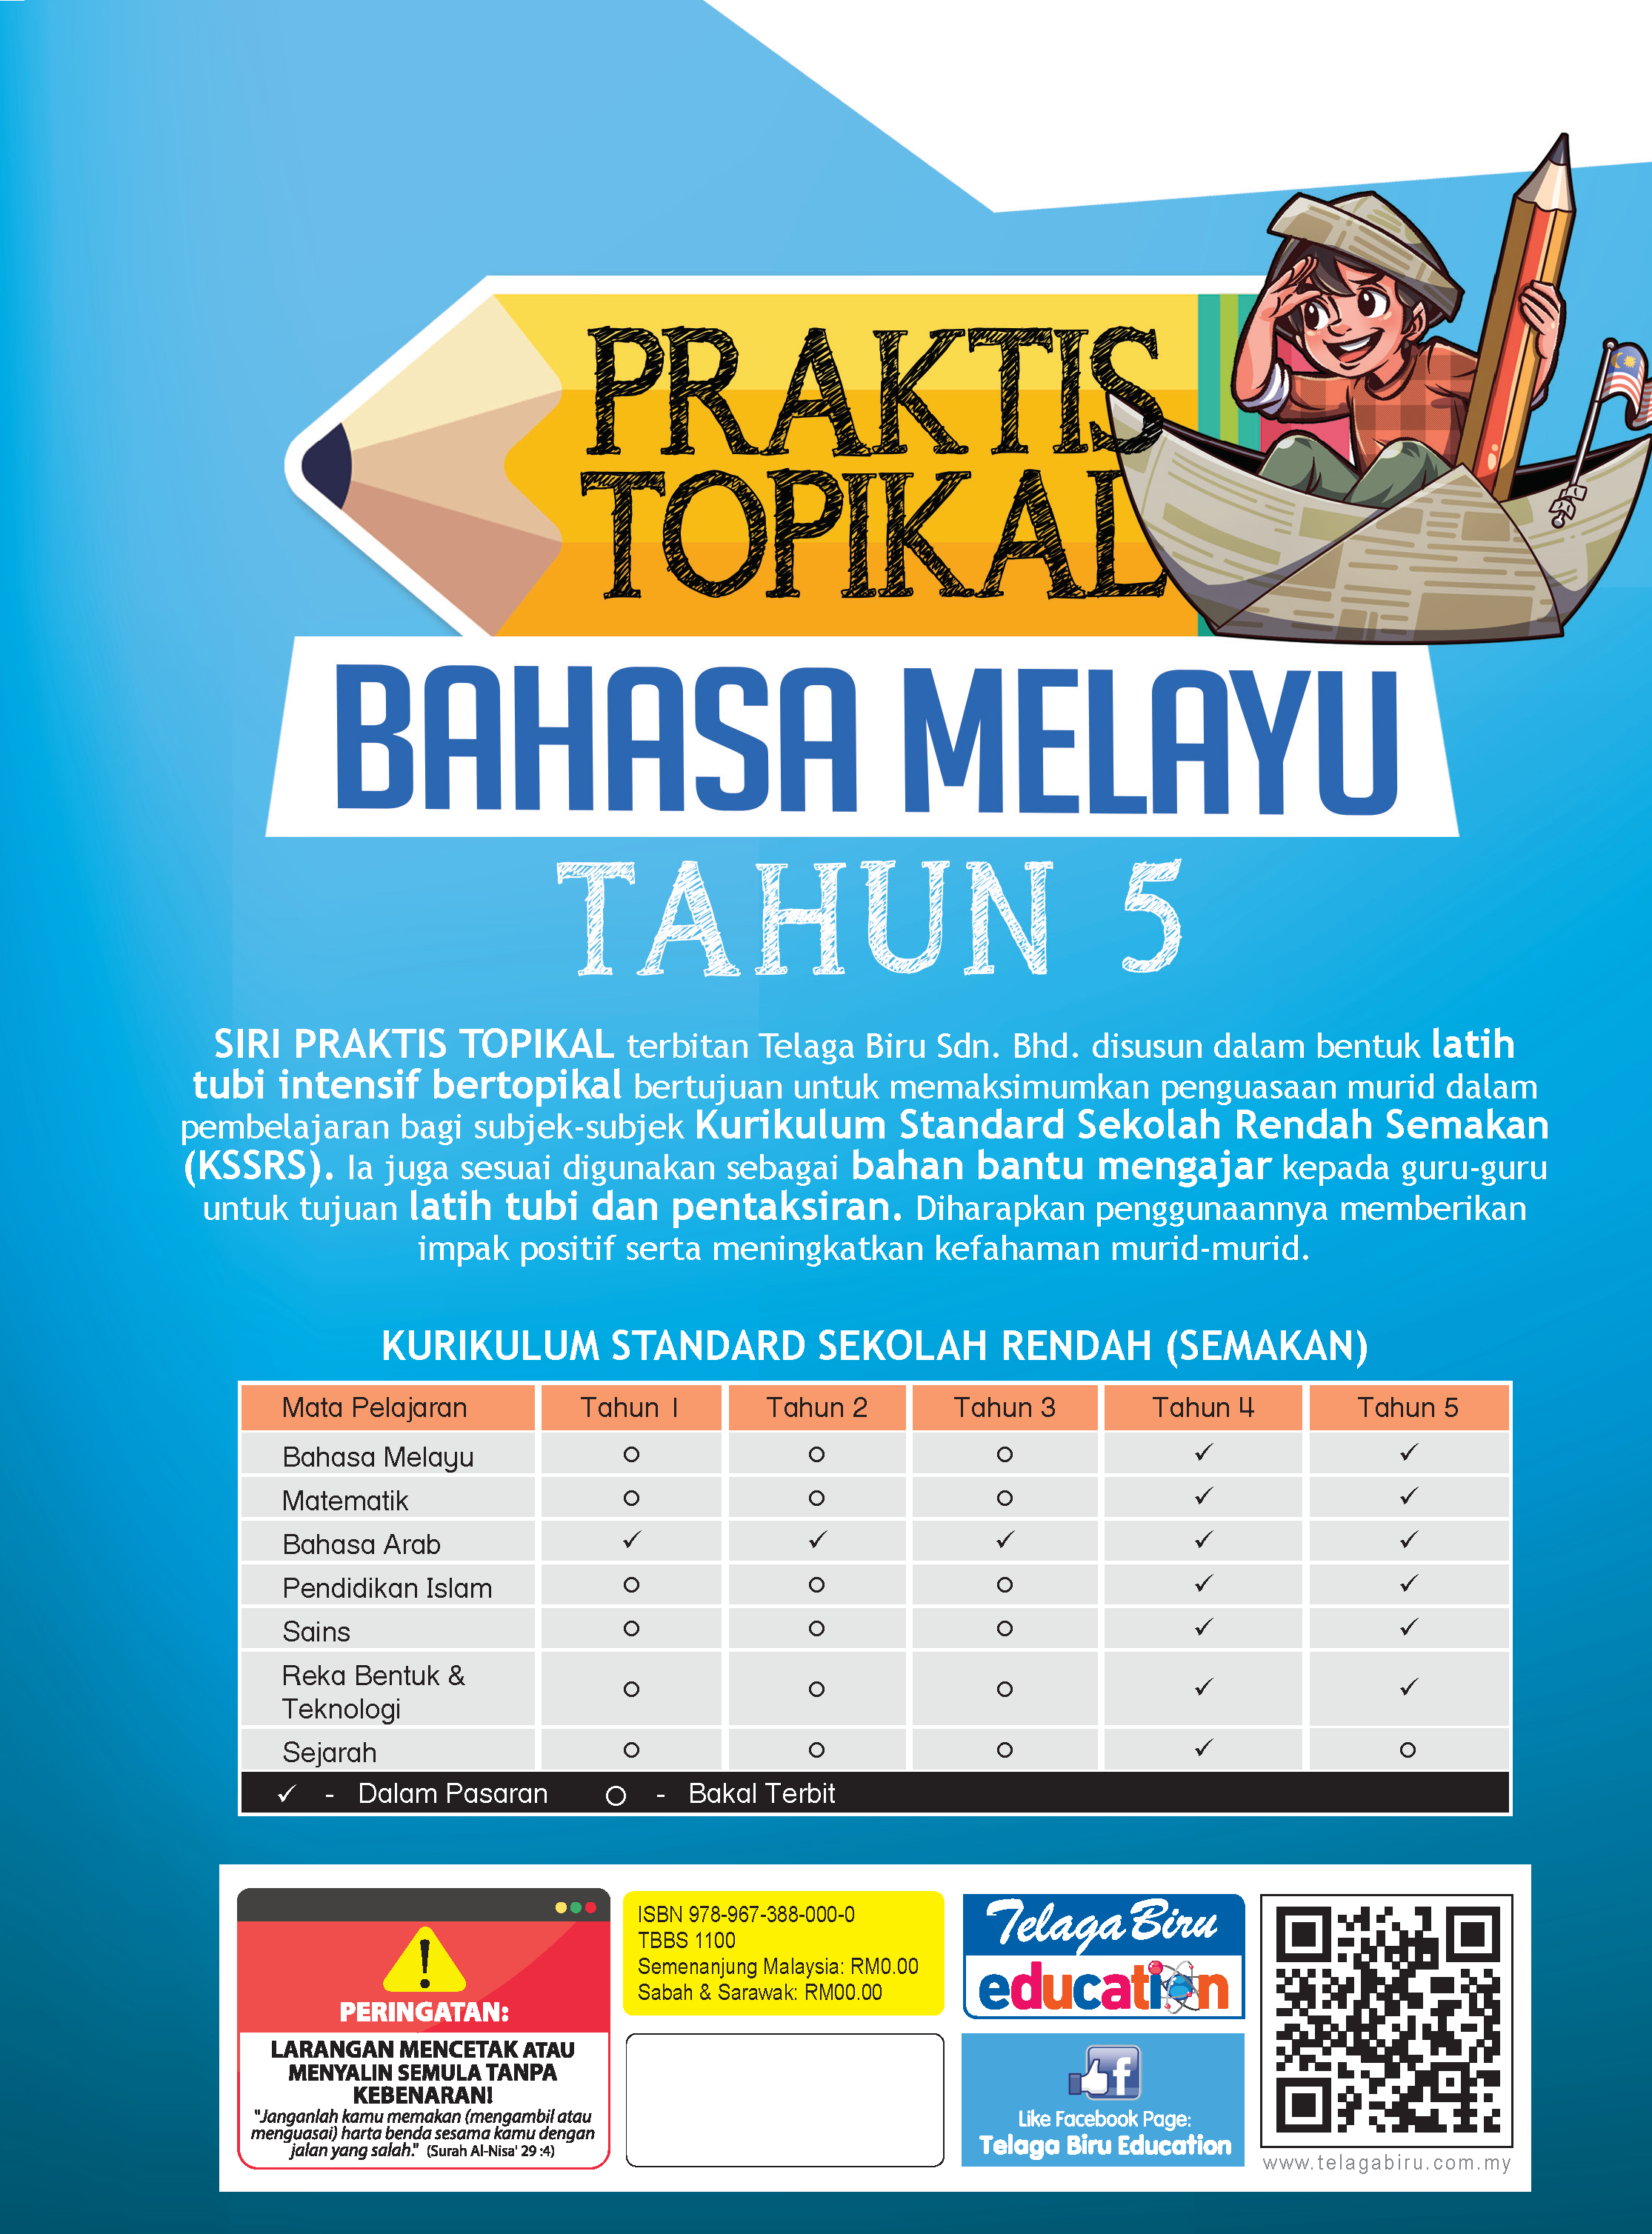 Praktis Topikal Bahasa Melayu (Tahun 5) – (TBBS1199)